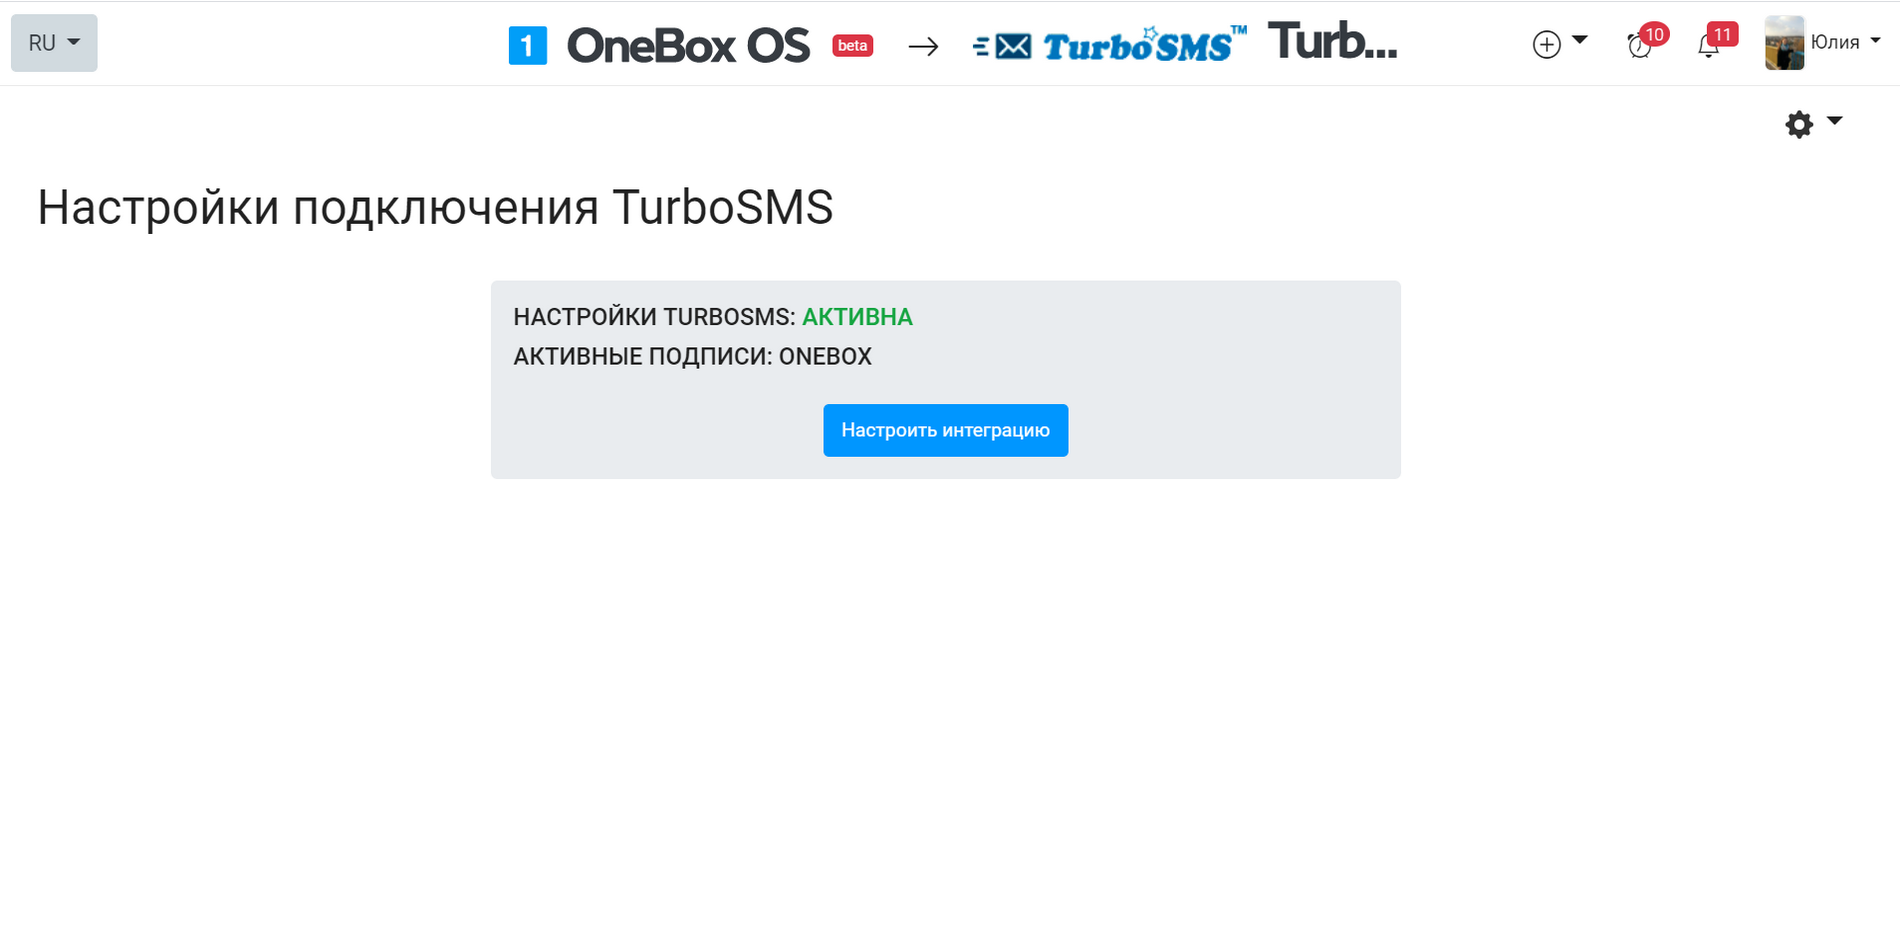 Application TurboSMS